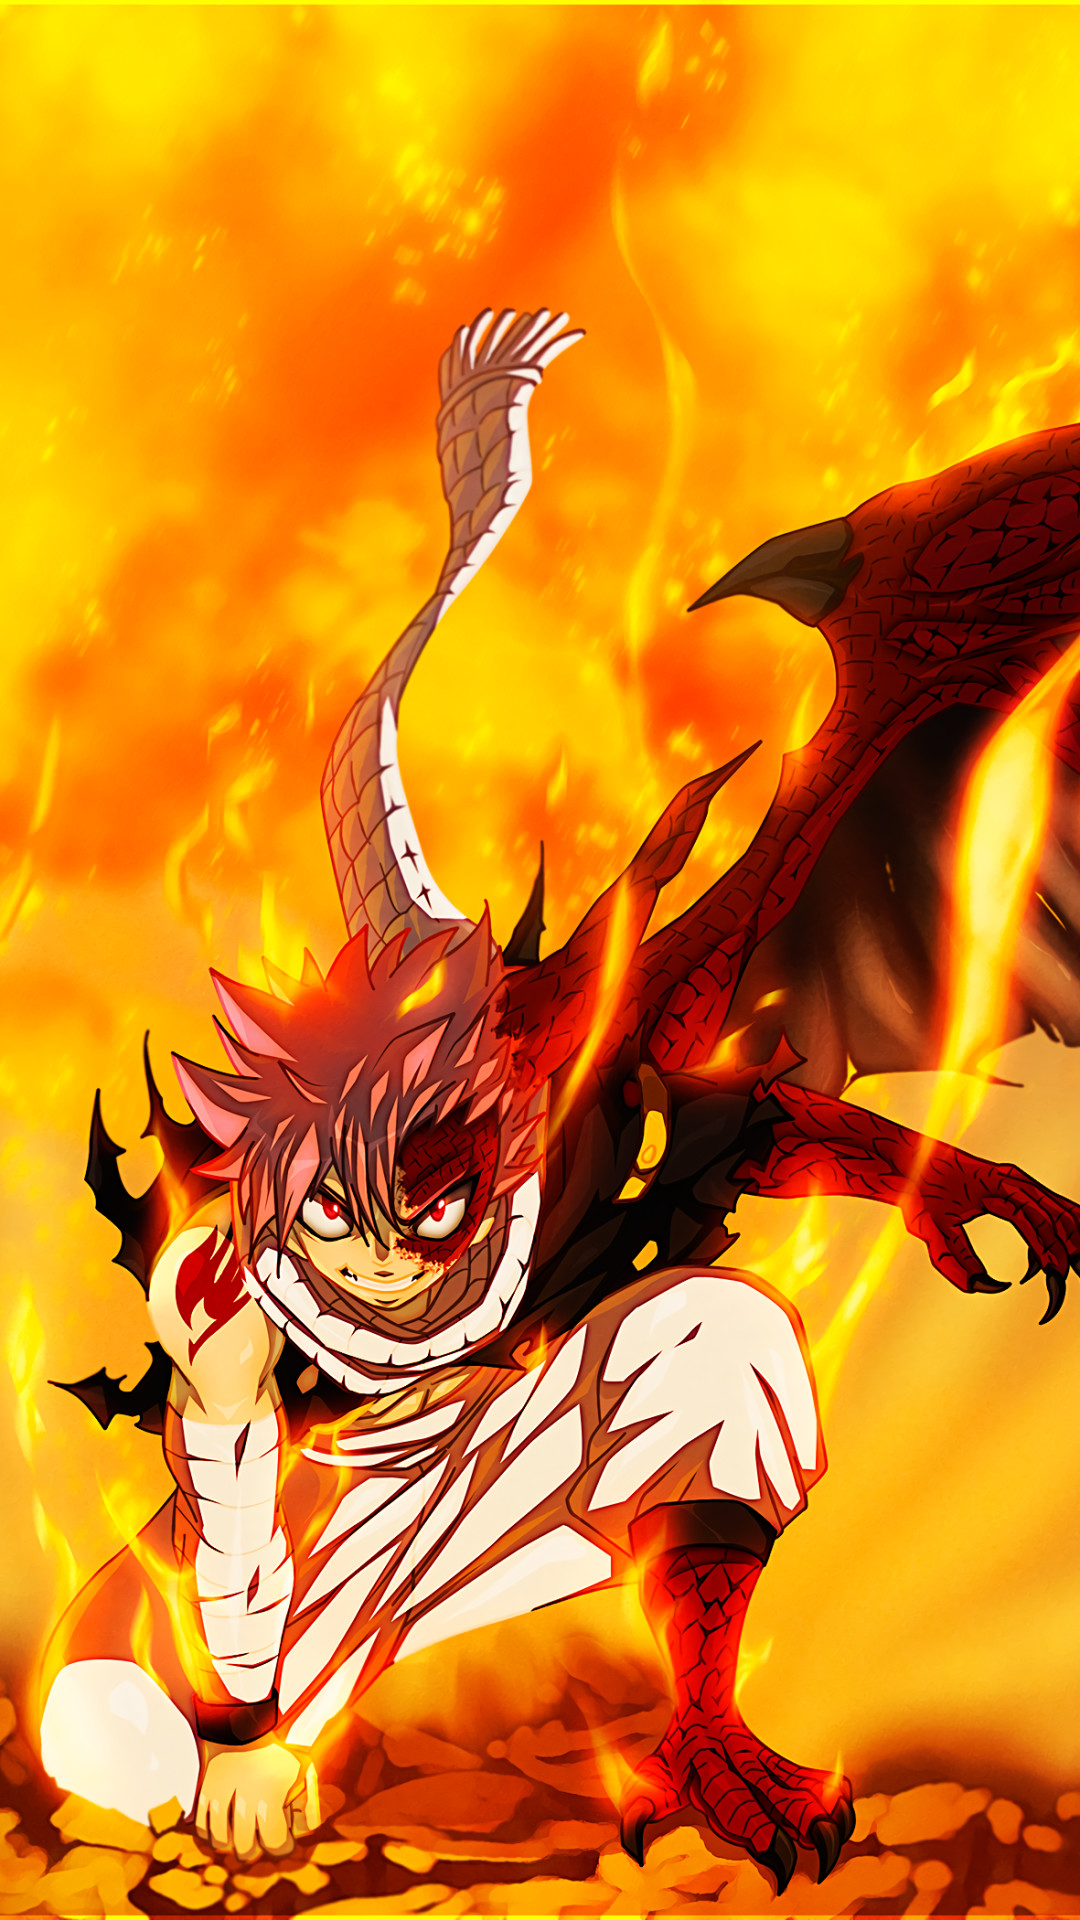 1080x1920 Anime Fairy Tail Natsu Dragneel Fire Mobile Wallpaper